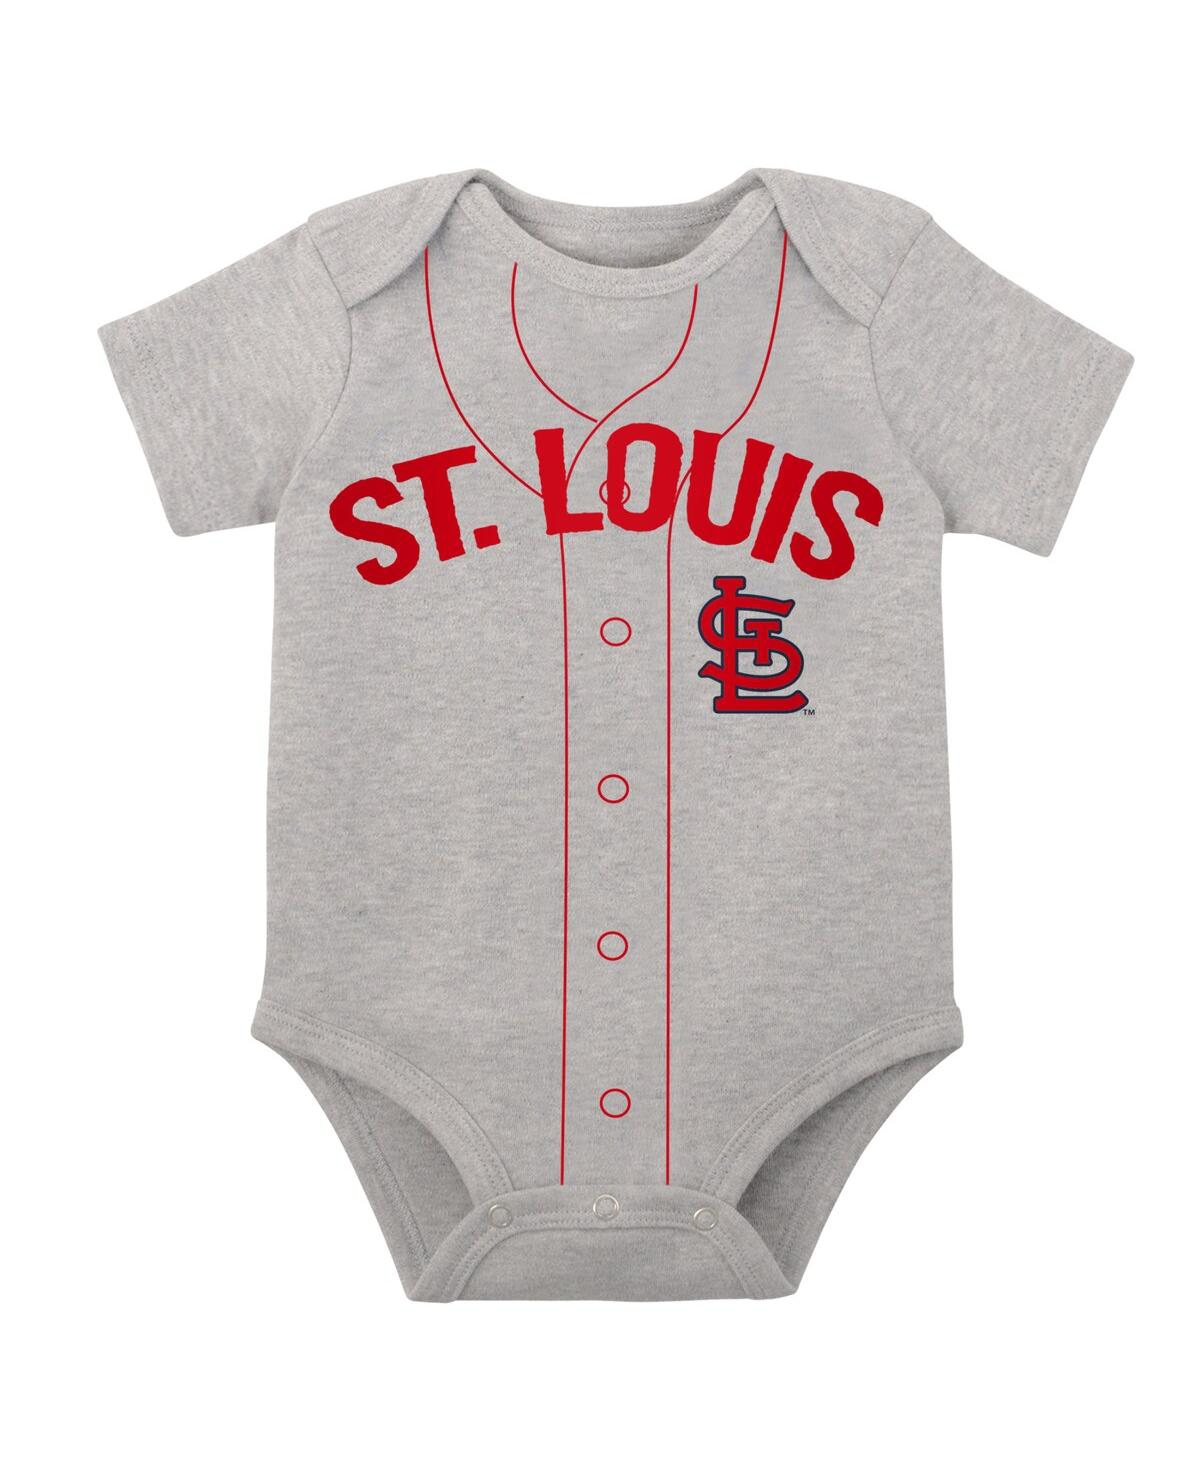 Outerstuff Infant Red/Heather Gray St. Louis Cardinals Little Fan Two-Pack Bodysuit Set